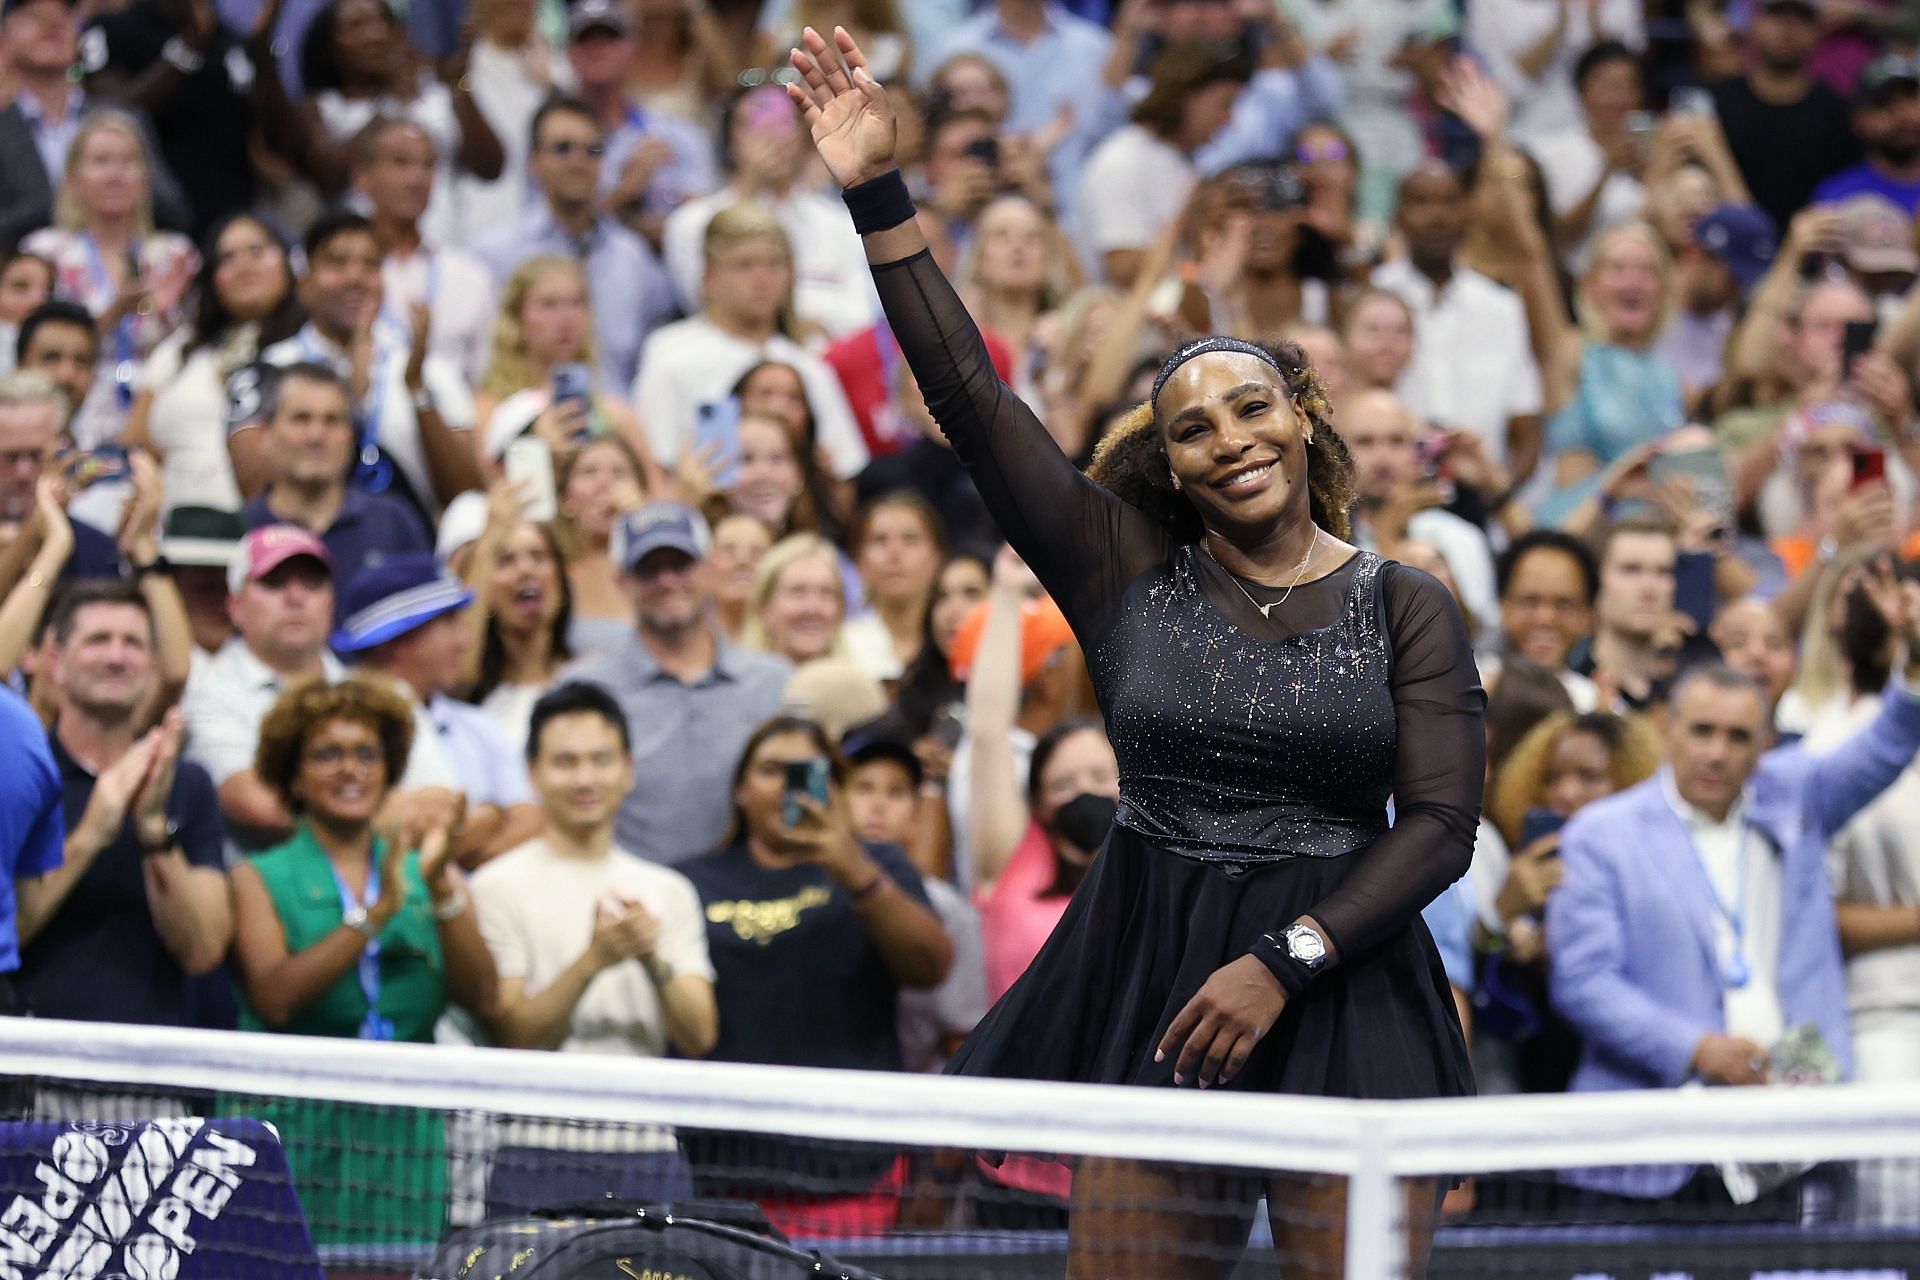 Serena Williams celebrates after winning her R2 match